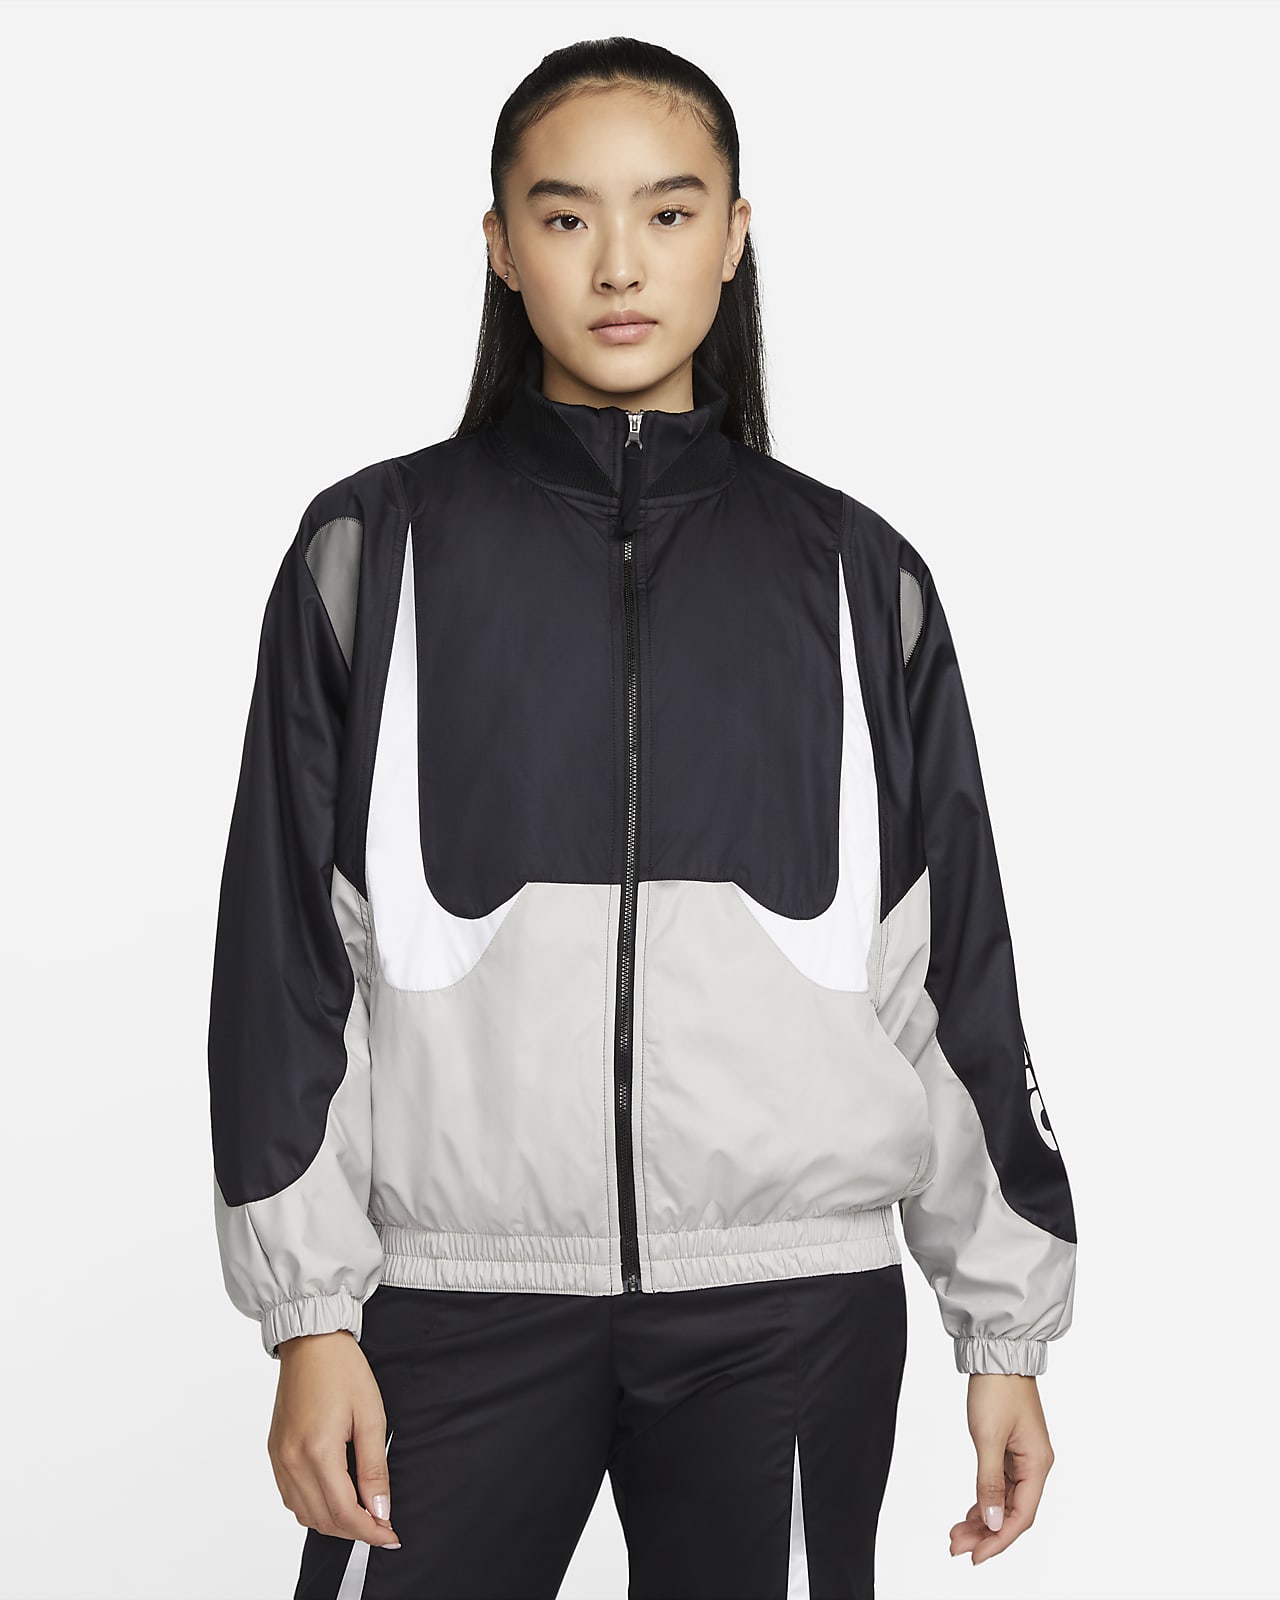 Nike Sportswear Women's Woven Air Max Day Jacket